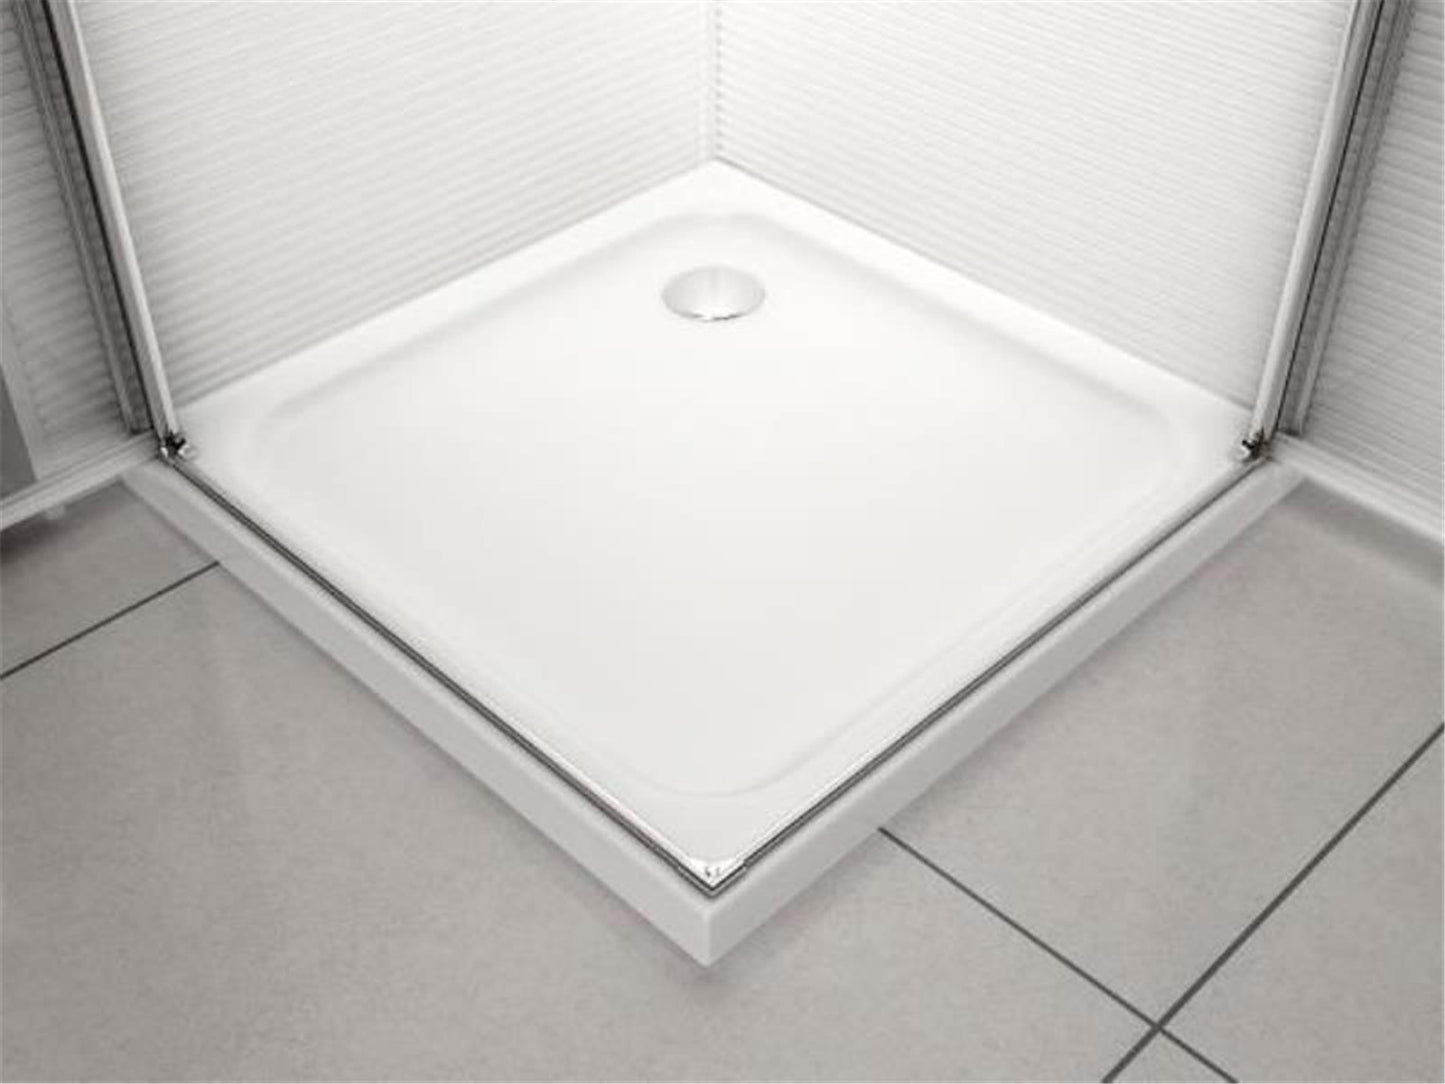 GlasHomeCenter - box doccia "Ichiro" (100x90x195cm) - 8mm - box doccia ad angolo - parete doccia - senza piatto doccia